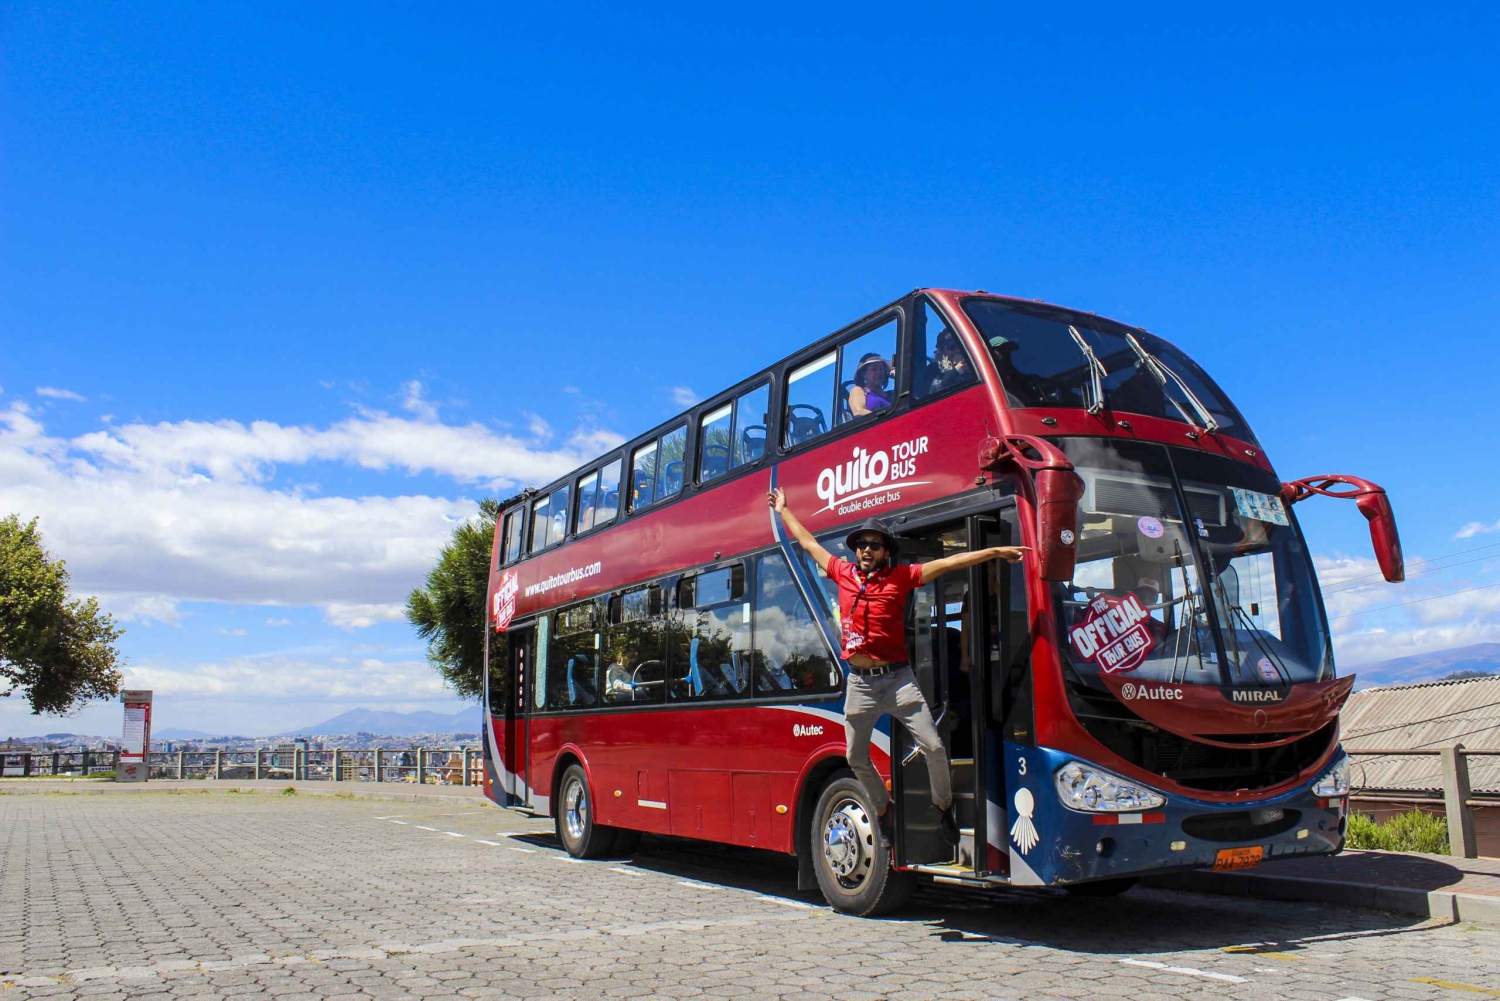 Quito Hop-on Hop-off City Bus Tour